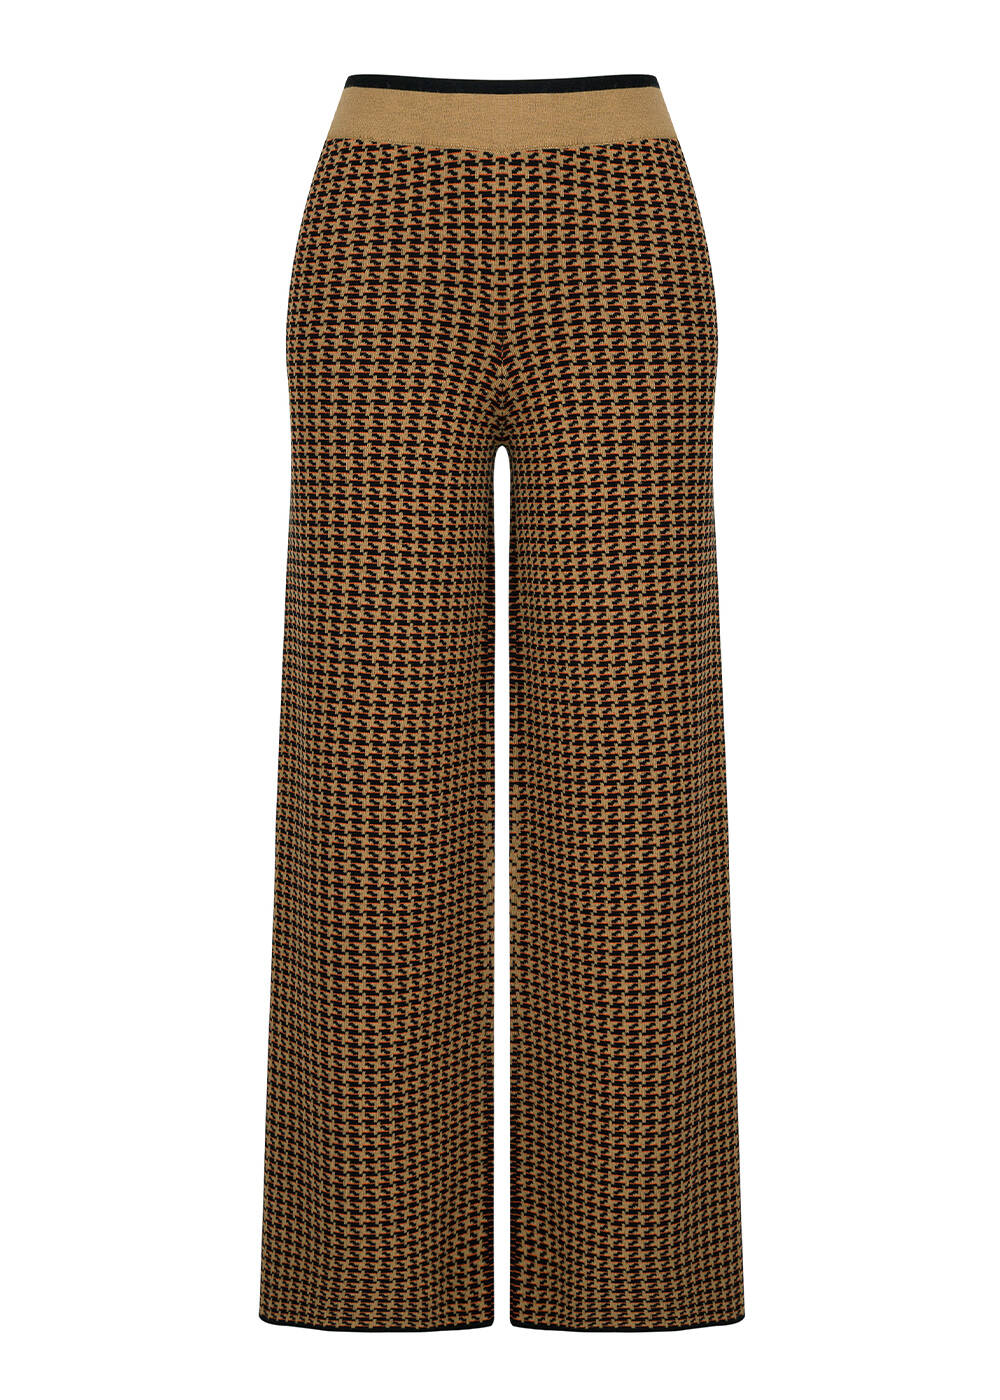 Patterned Wool Black & Camel Knit Pants | KNITSS